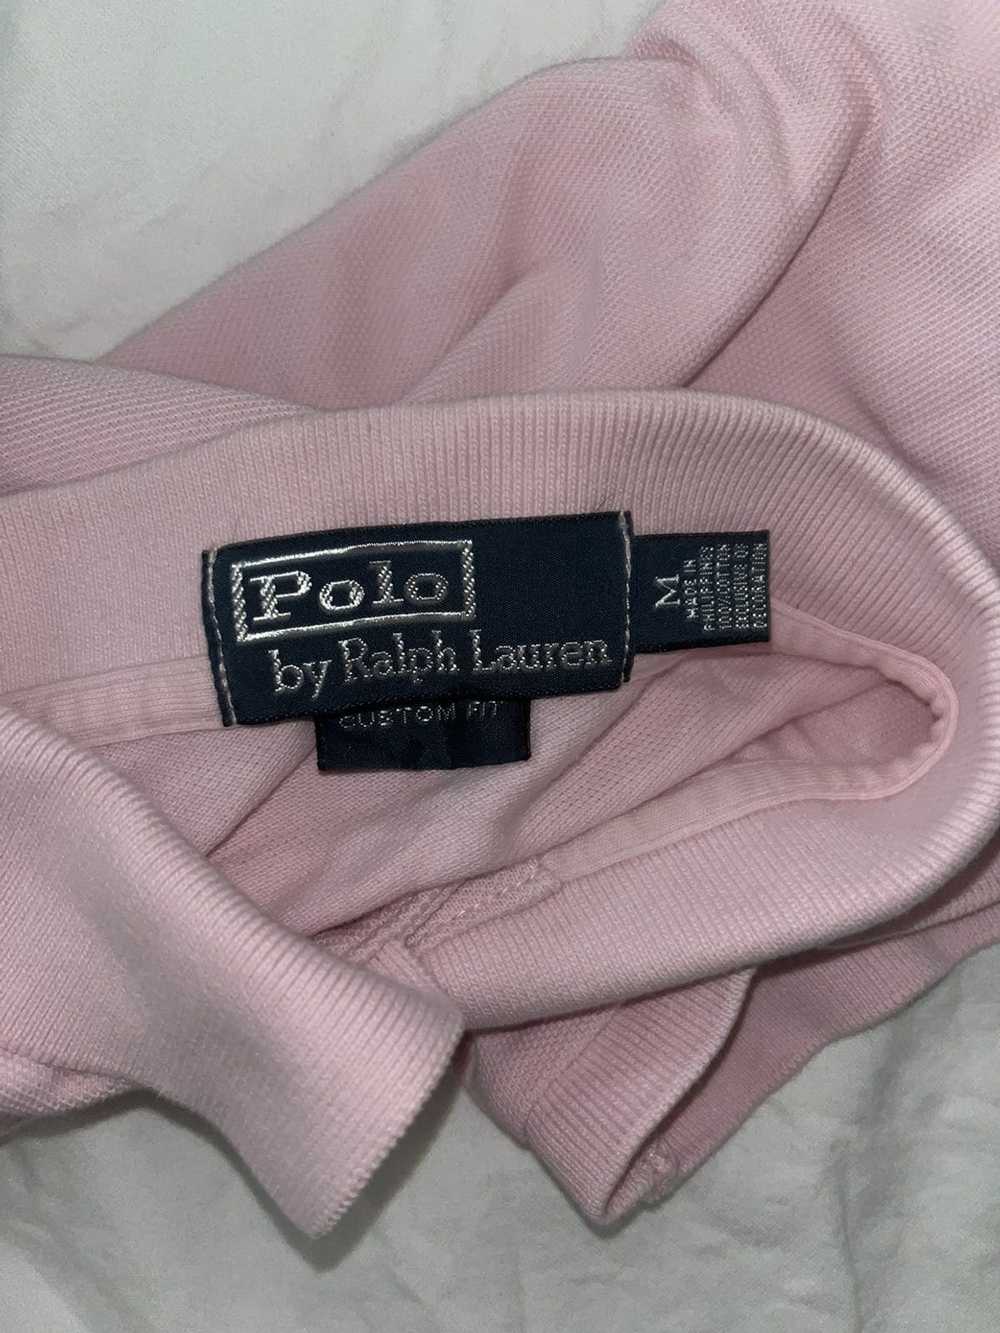 Polo Ralph Lauren Pink Polo - image 4